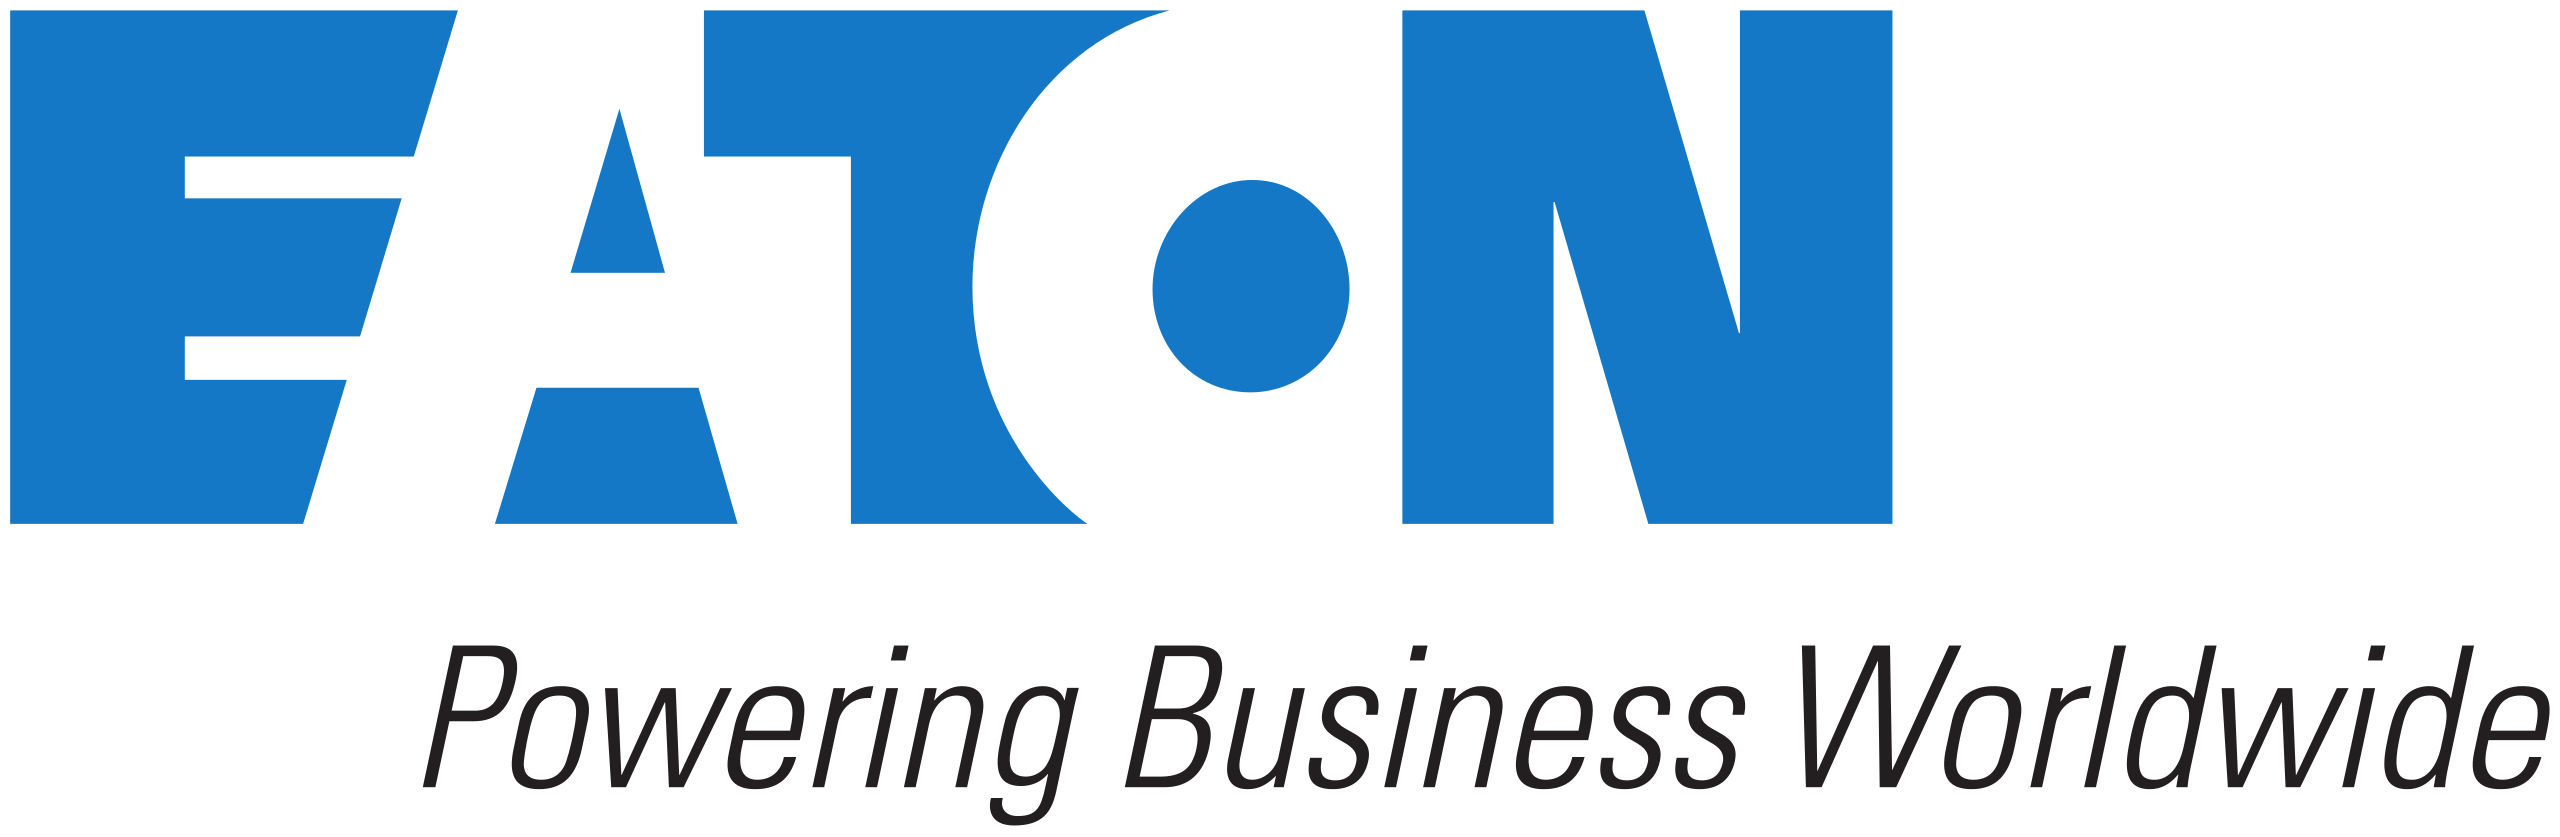 Eaton Corporation Logo svg